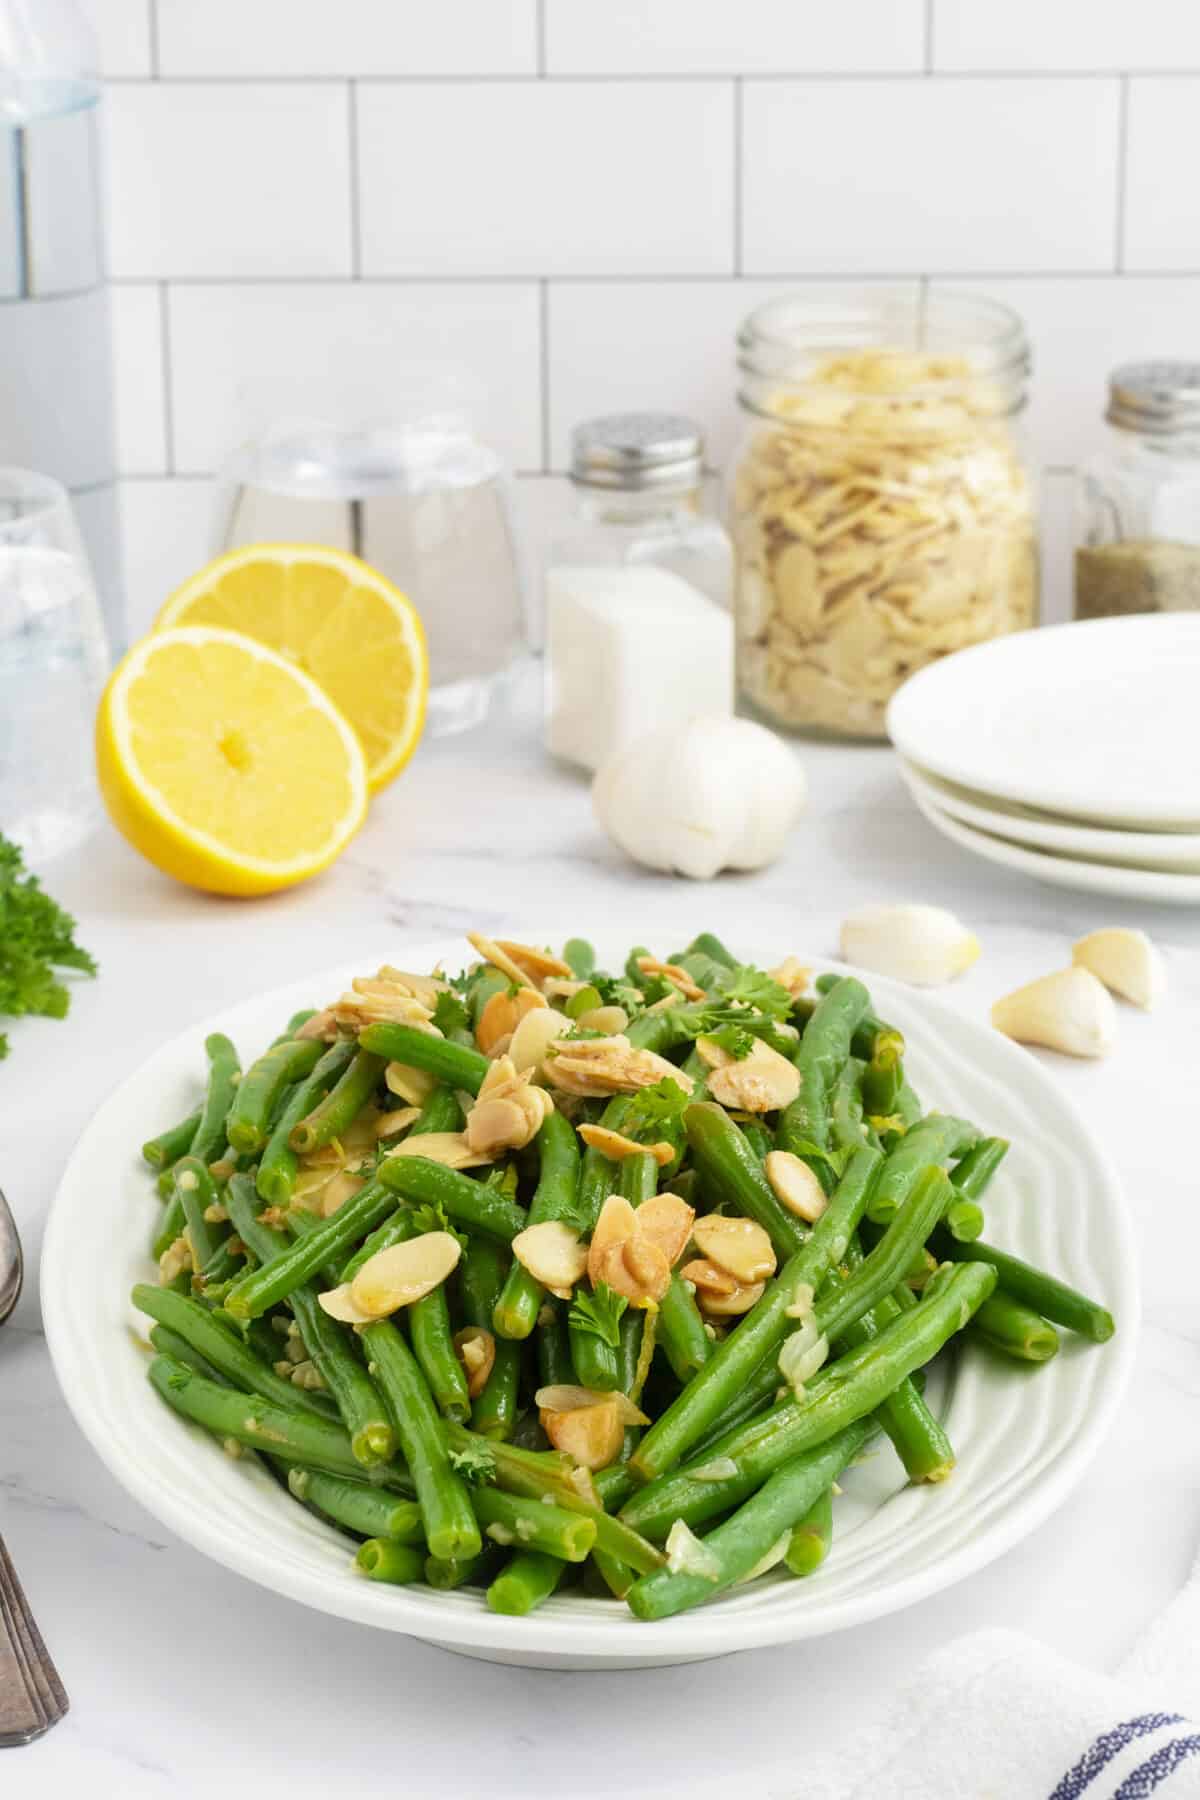 green beans almondine on a platter with a lemon beside it